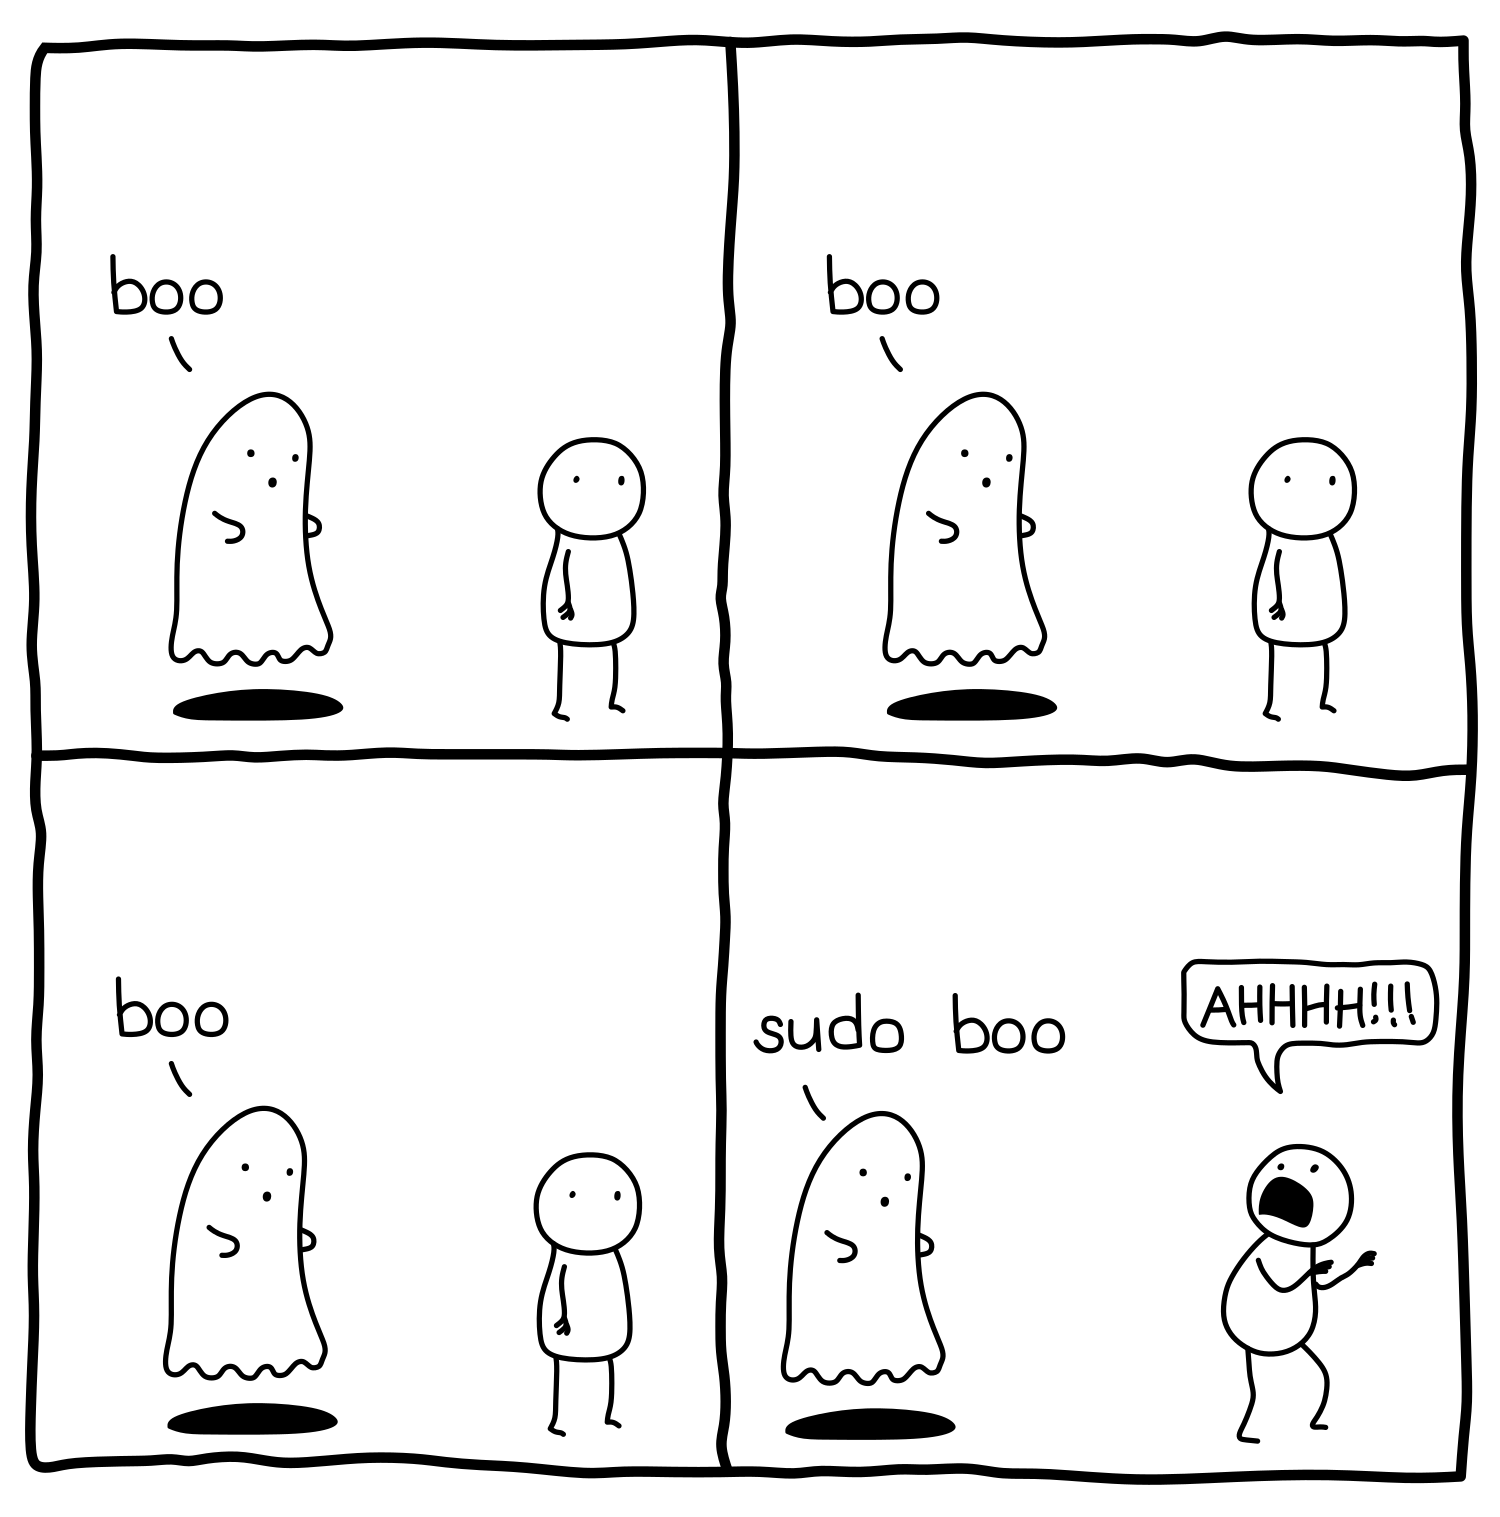 Boo! boo! boo! Sudo boo!